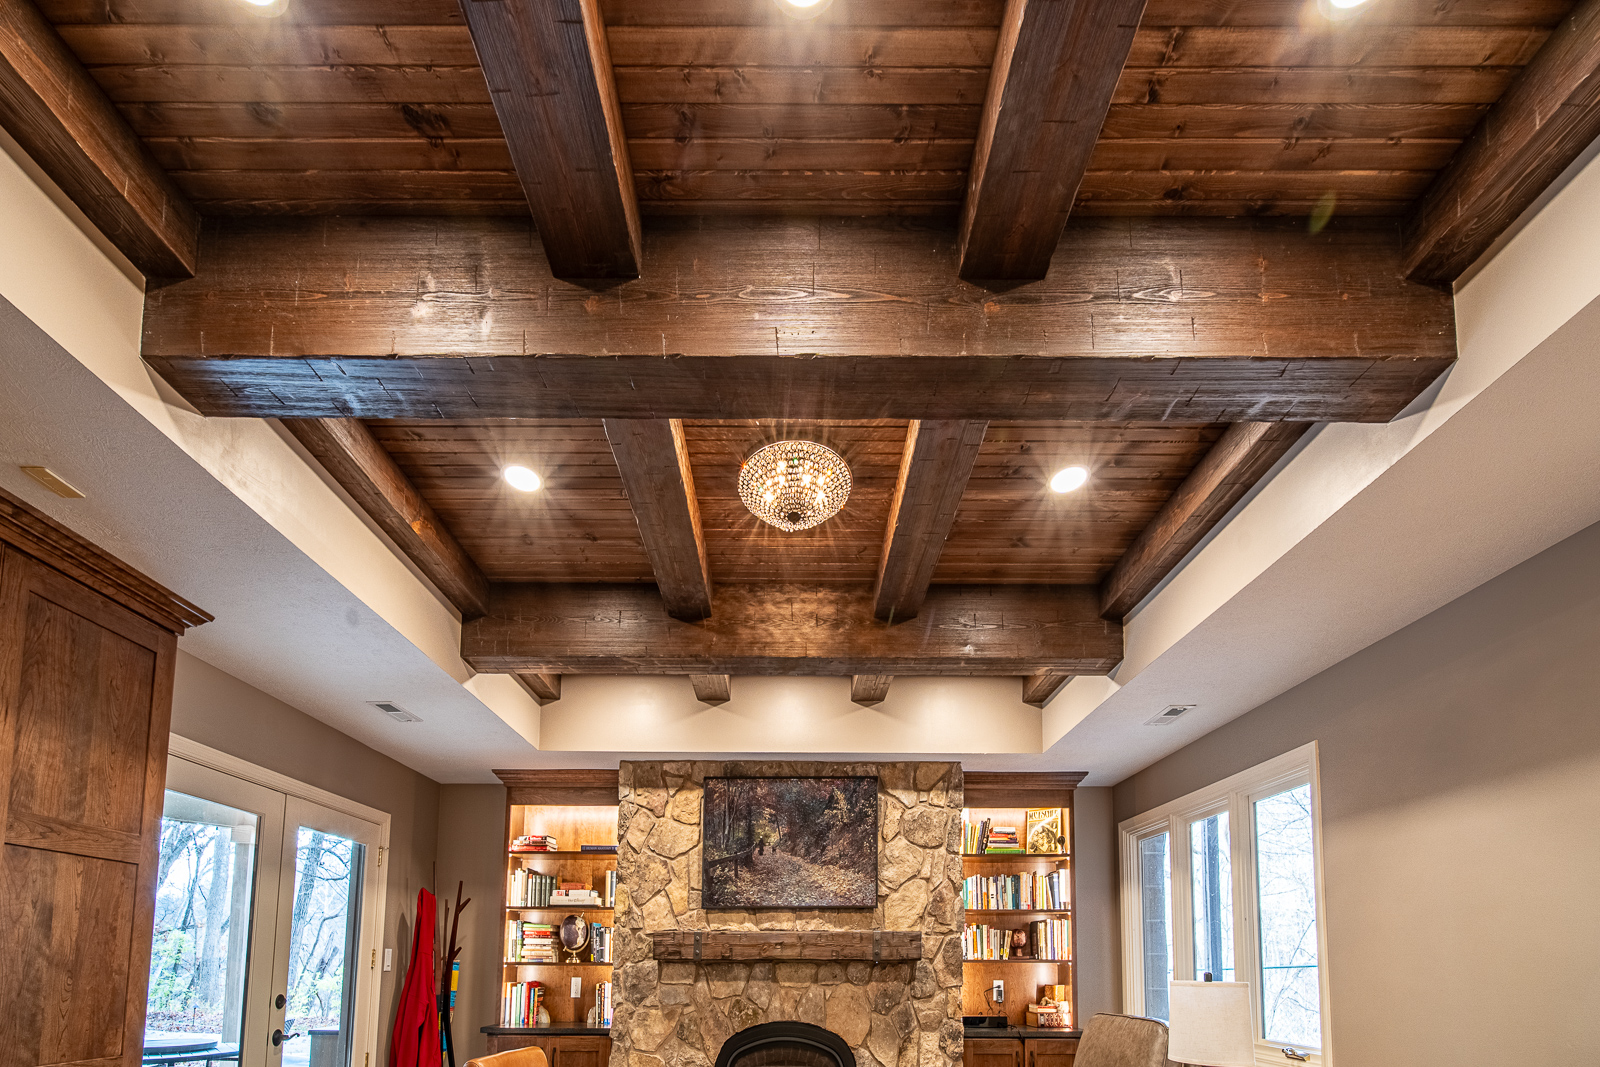 Elegant tray ceiling with rustic wood beams in Ripple Creek Drive basement remodel.